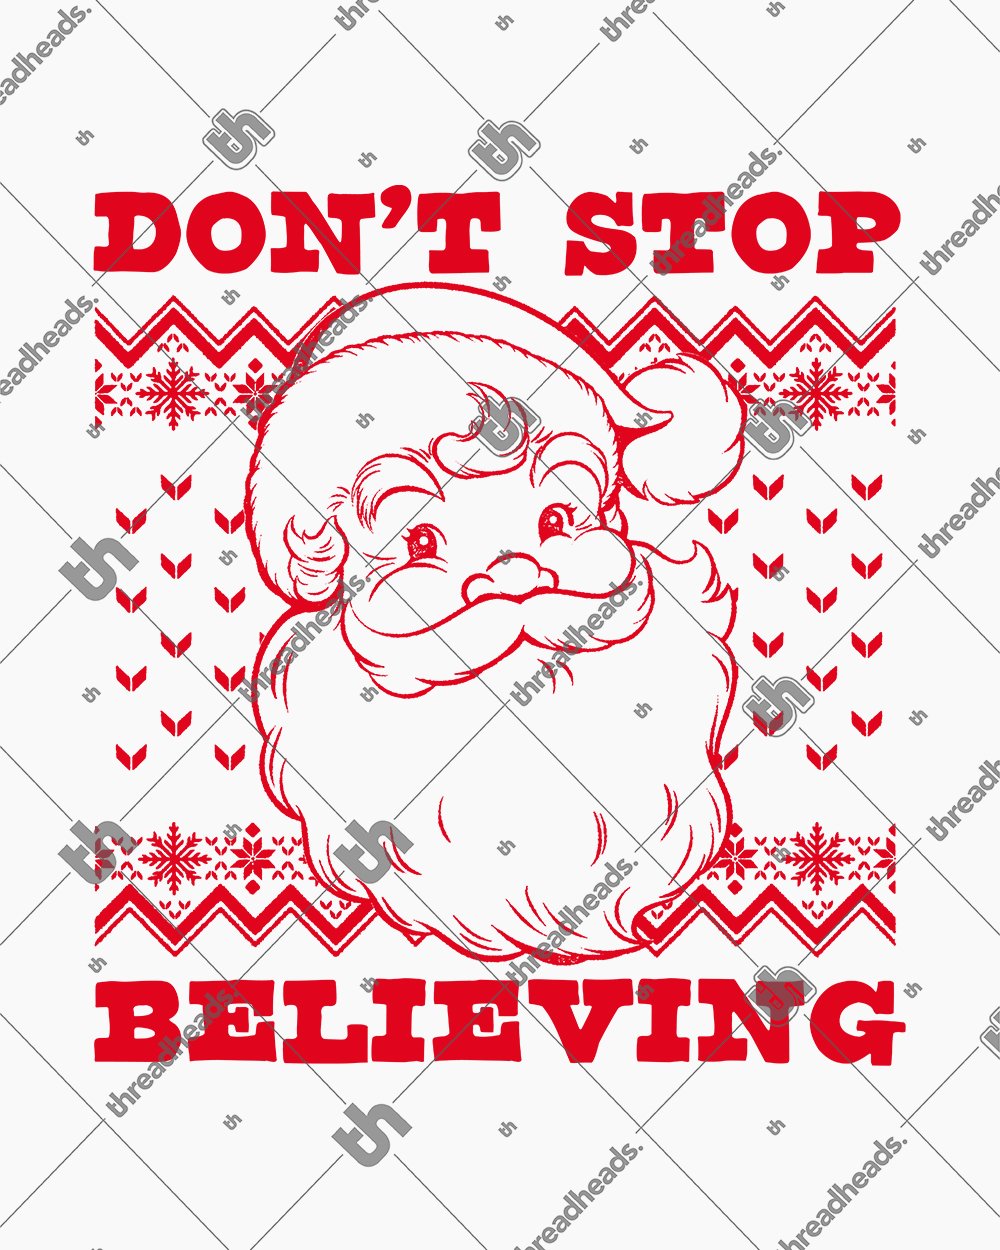 Don’t Stop Believing Santa Sweater Australia Online #colour_white